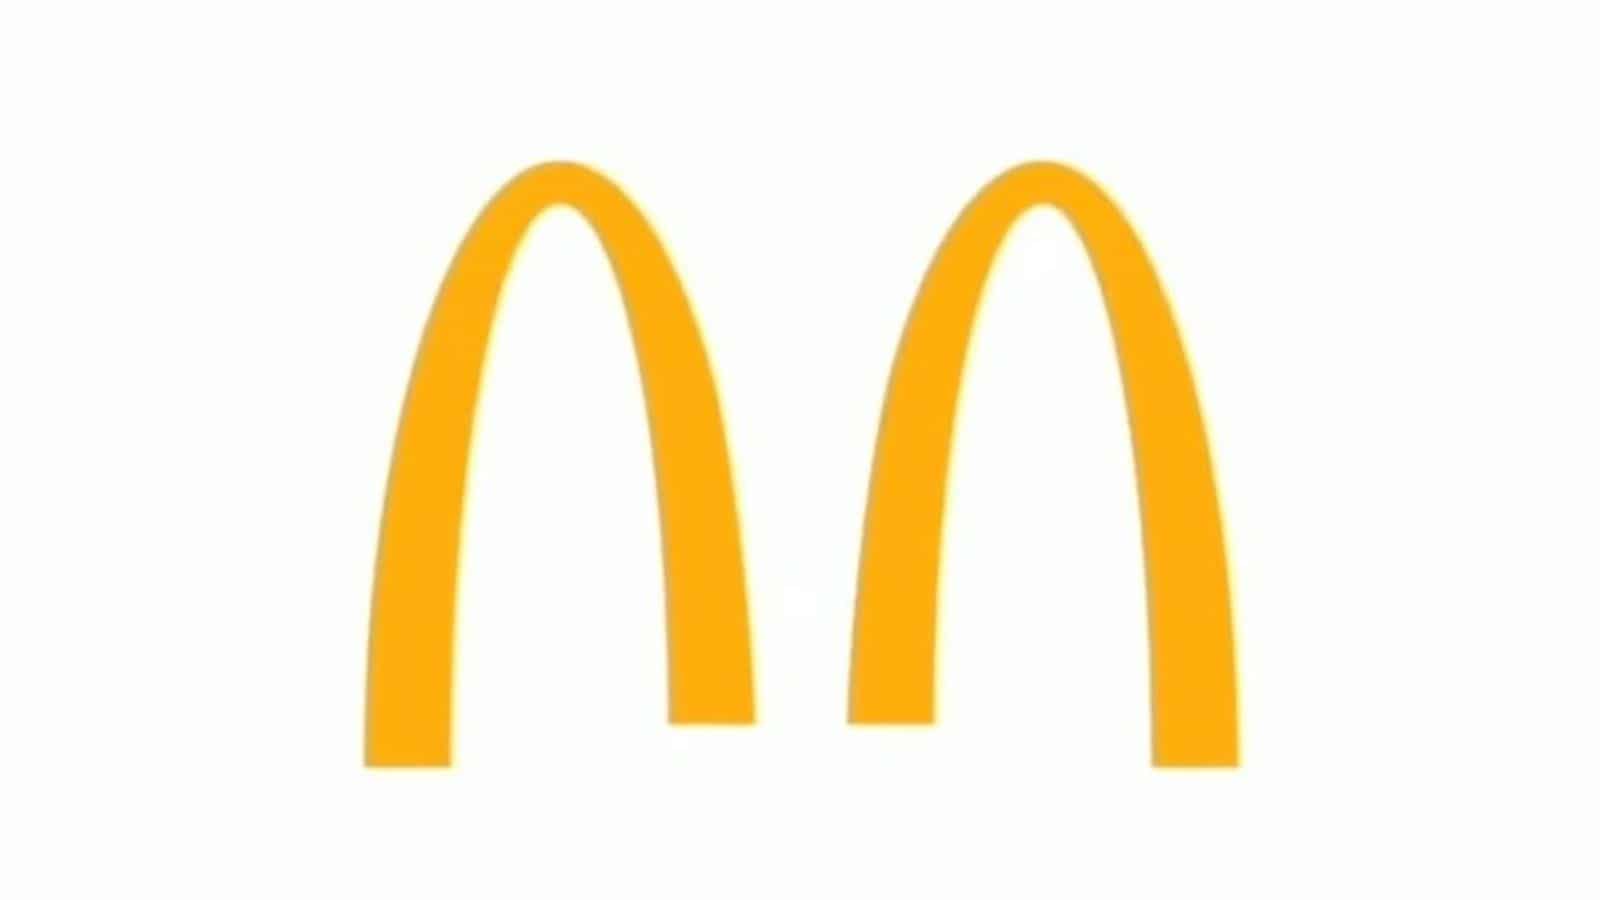 Coronavirus: McDonald's splits logo to promote social distancing